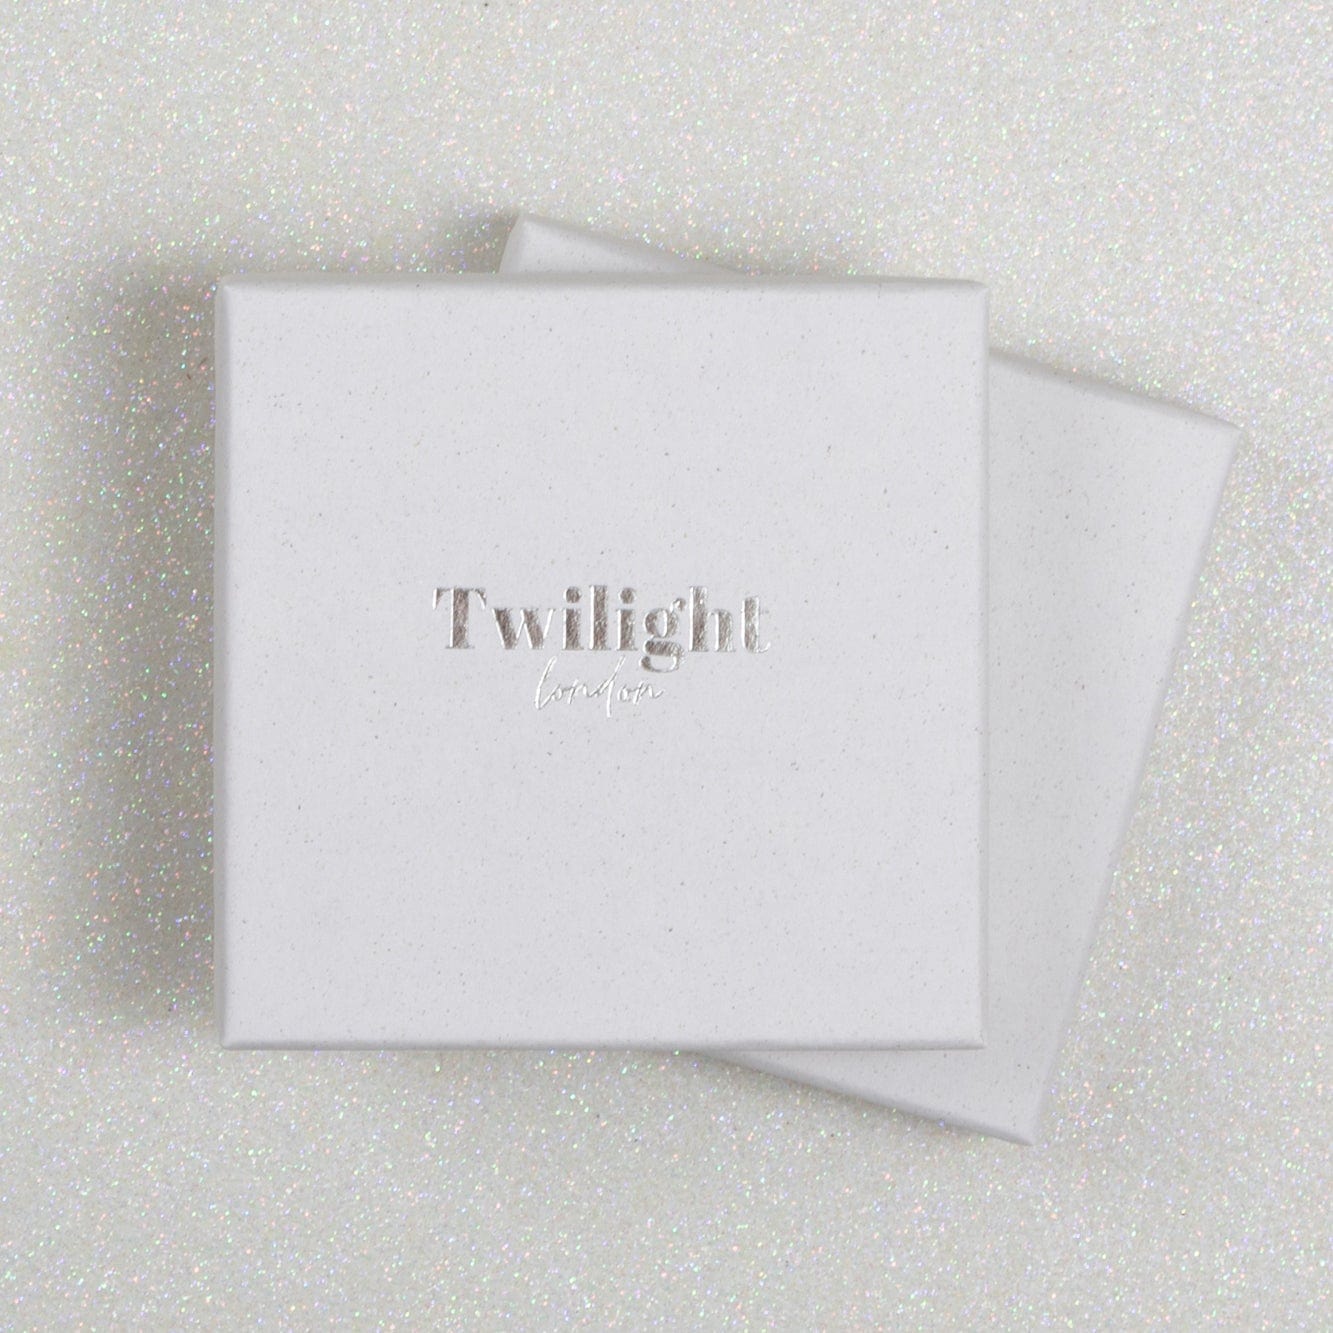 Twilight London Gift Box